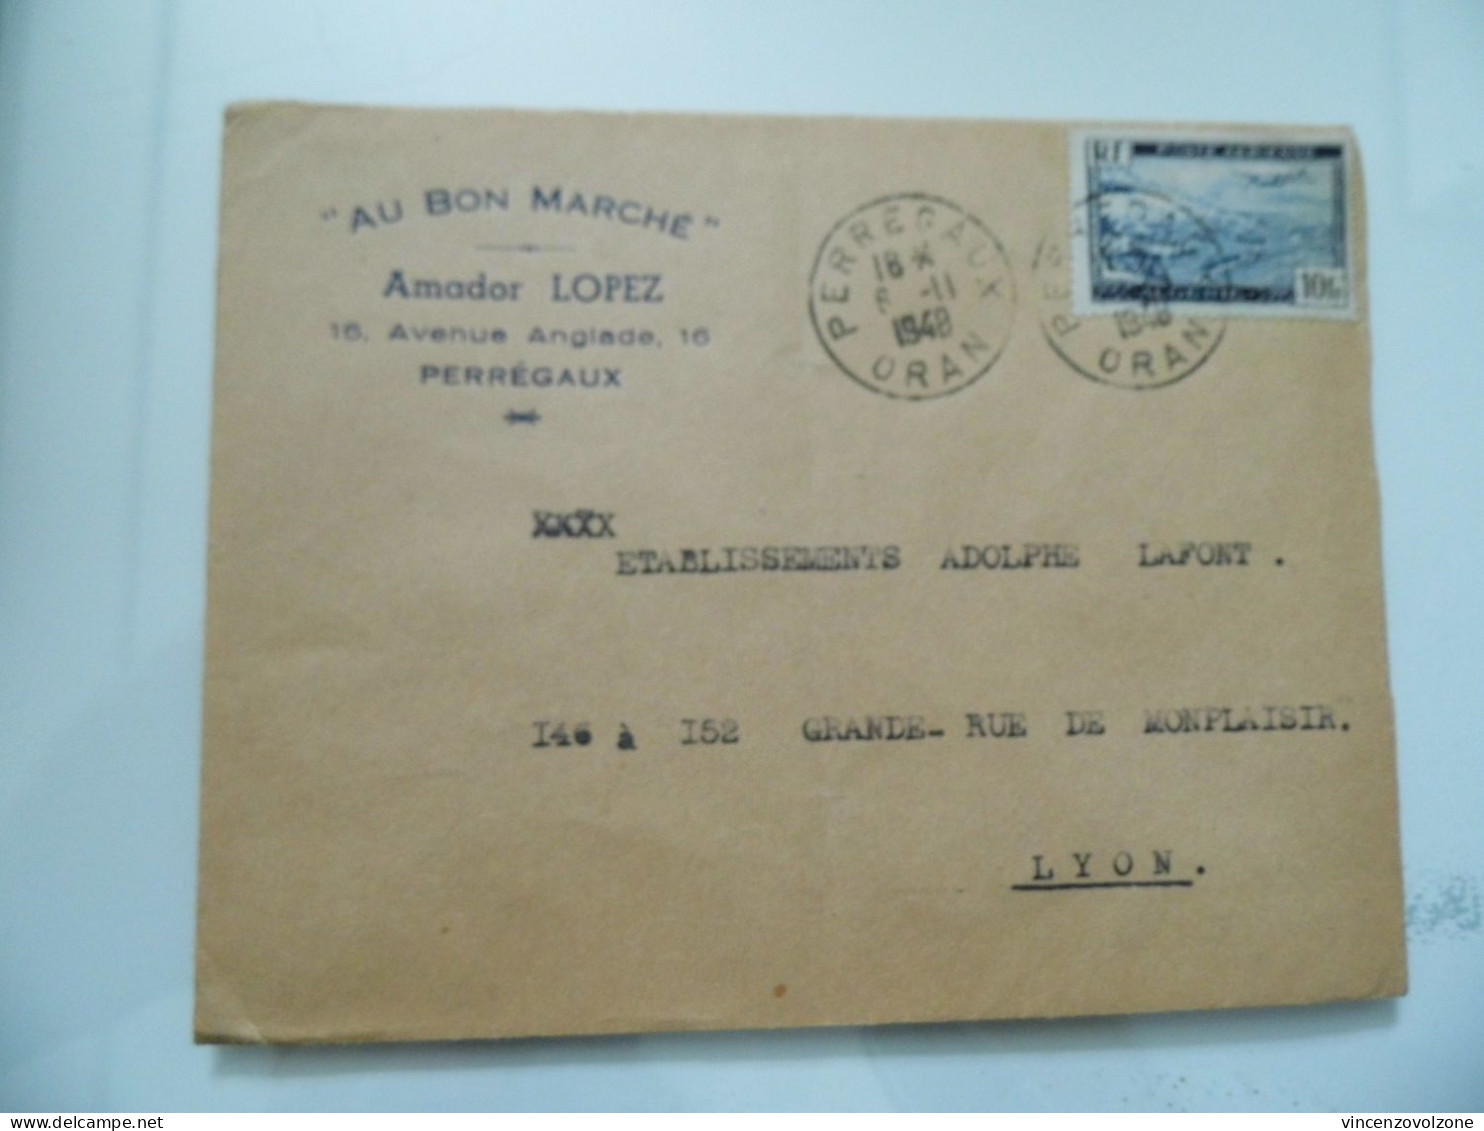 Busta Viaggiata Per La Francia Posta Aerea "AU BONNE MARCHE' Amador LOPEZ PERREGAUX" 1948 - Luftpost